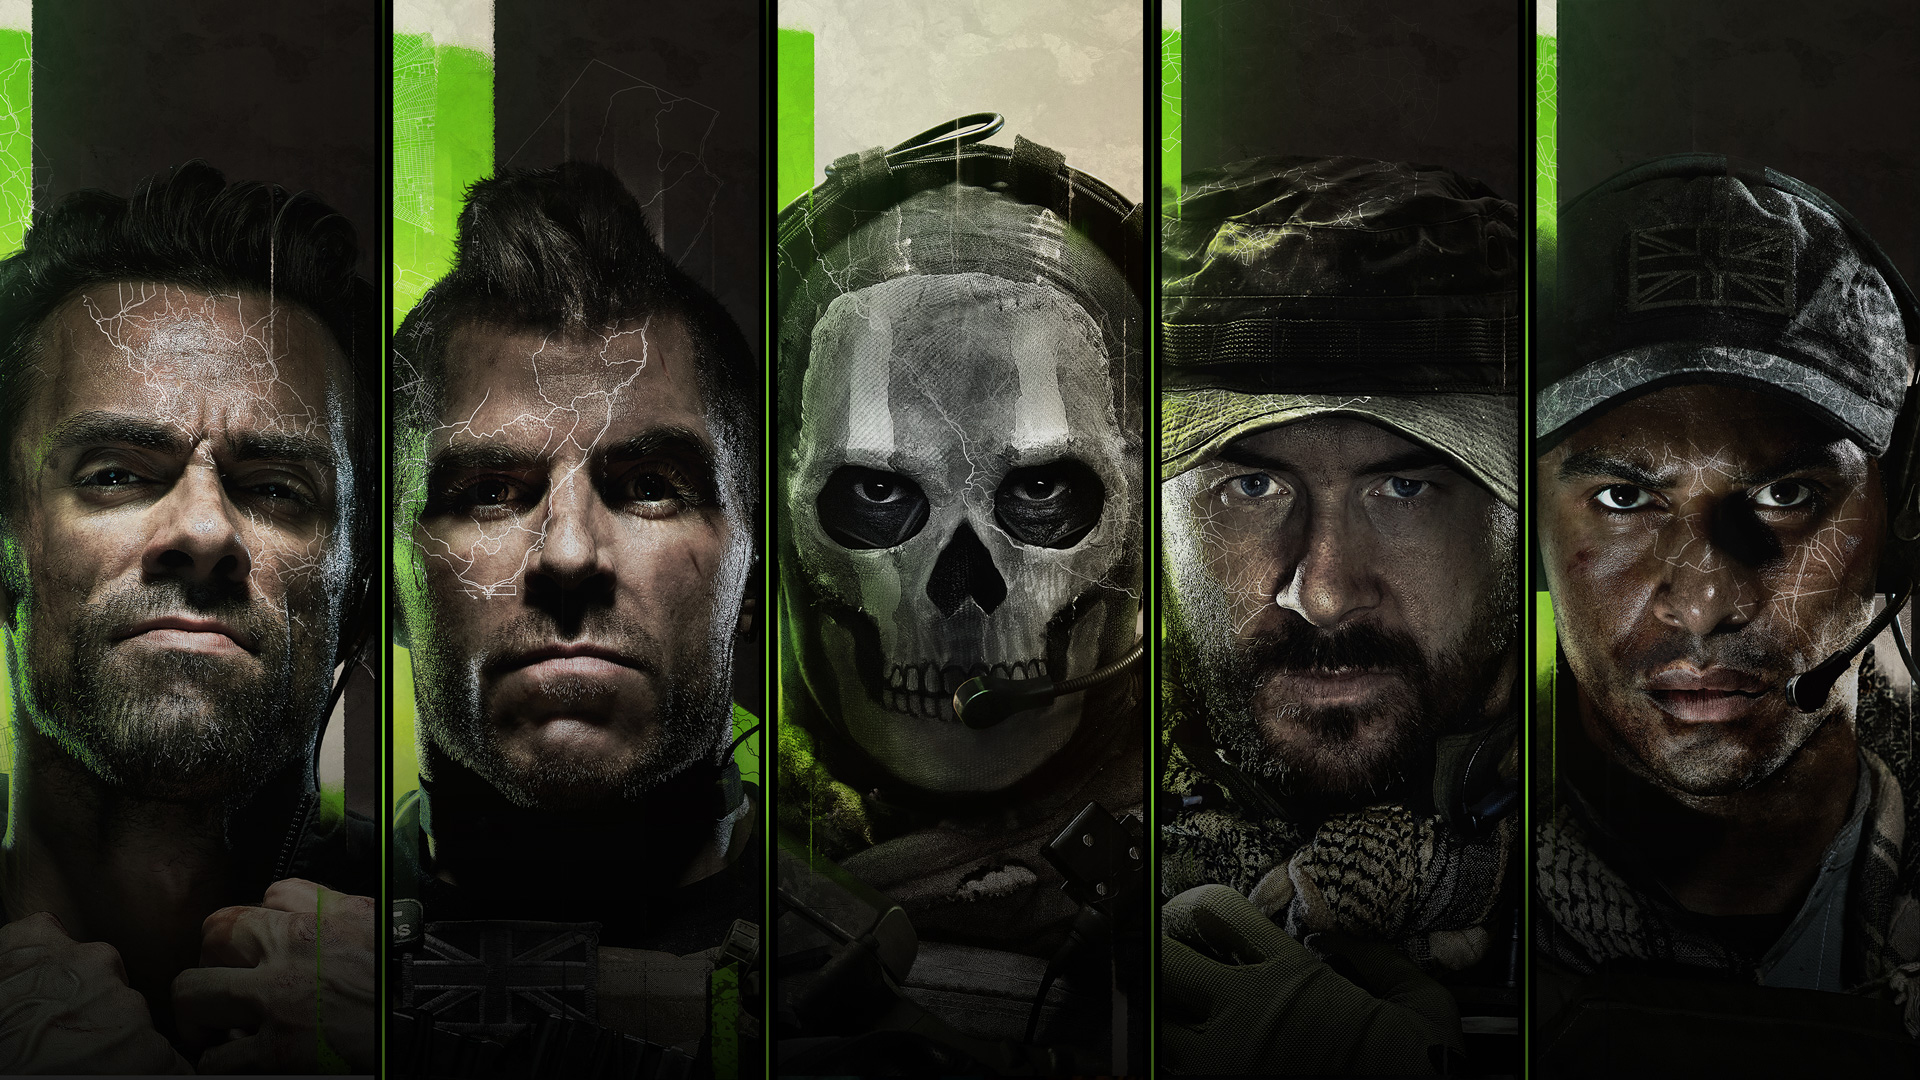 Call of Duty Modern Warfare 2 Remastered: clássico volta com belo visual